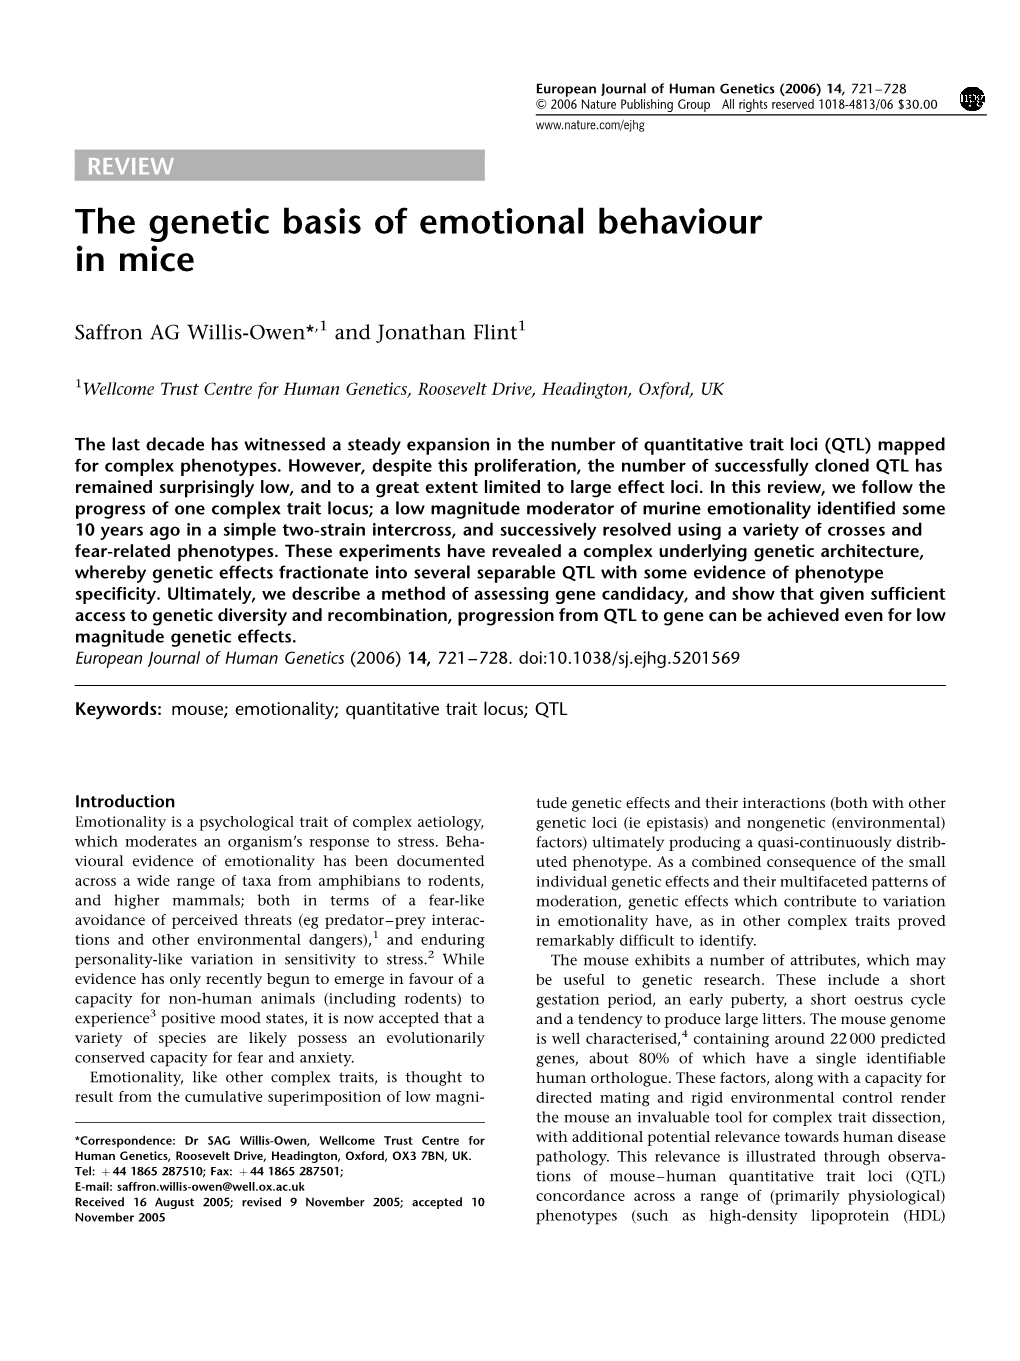 The Genetic Basis of Emotional Behaviour in Mice